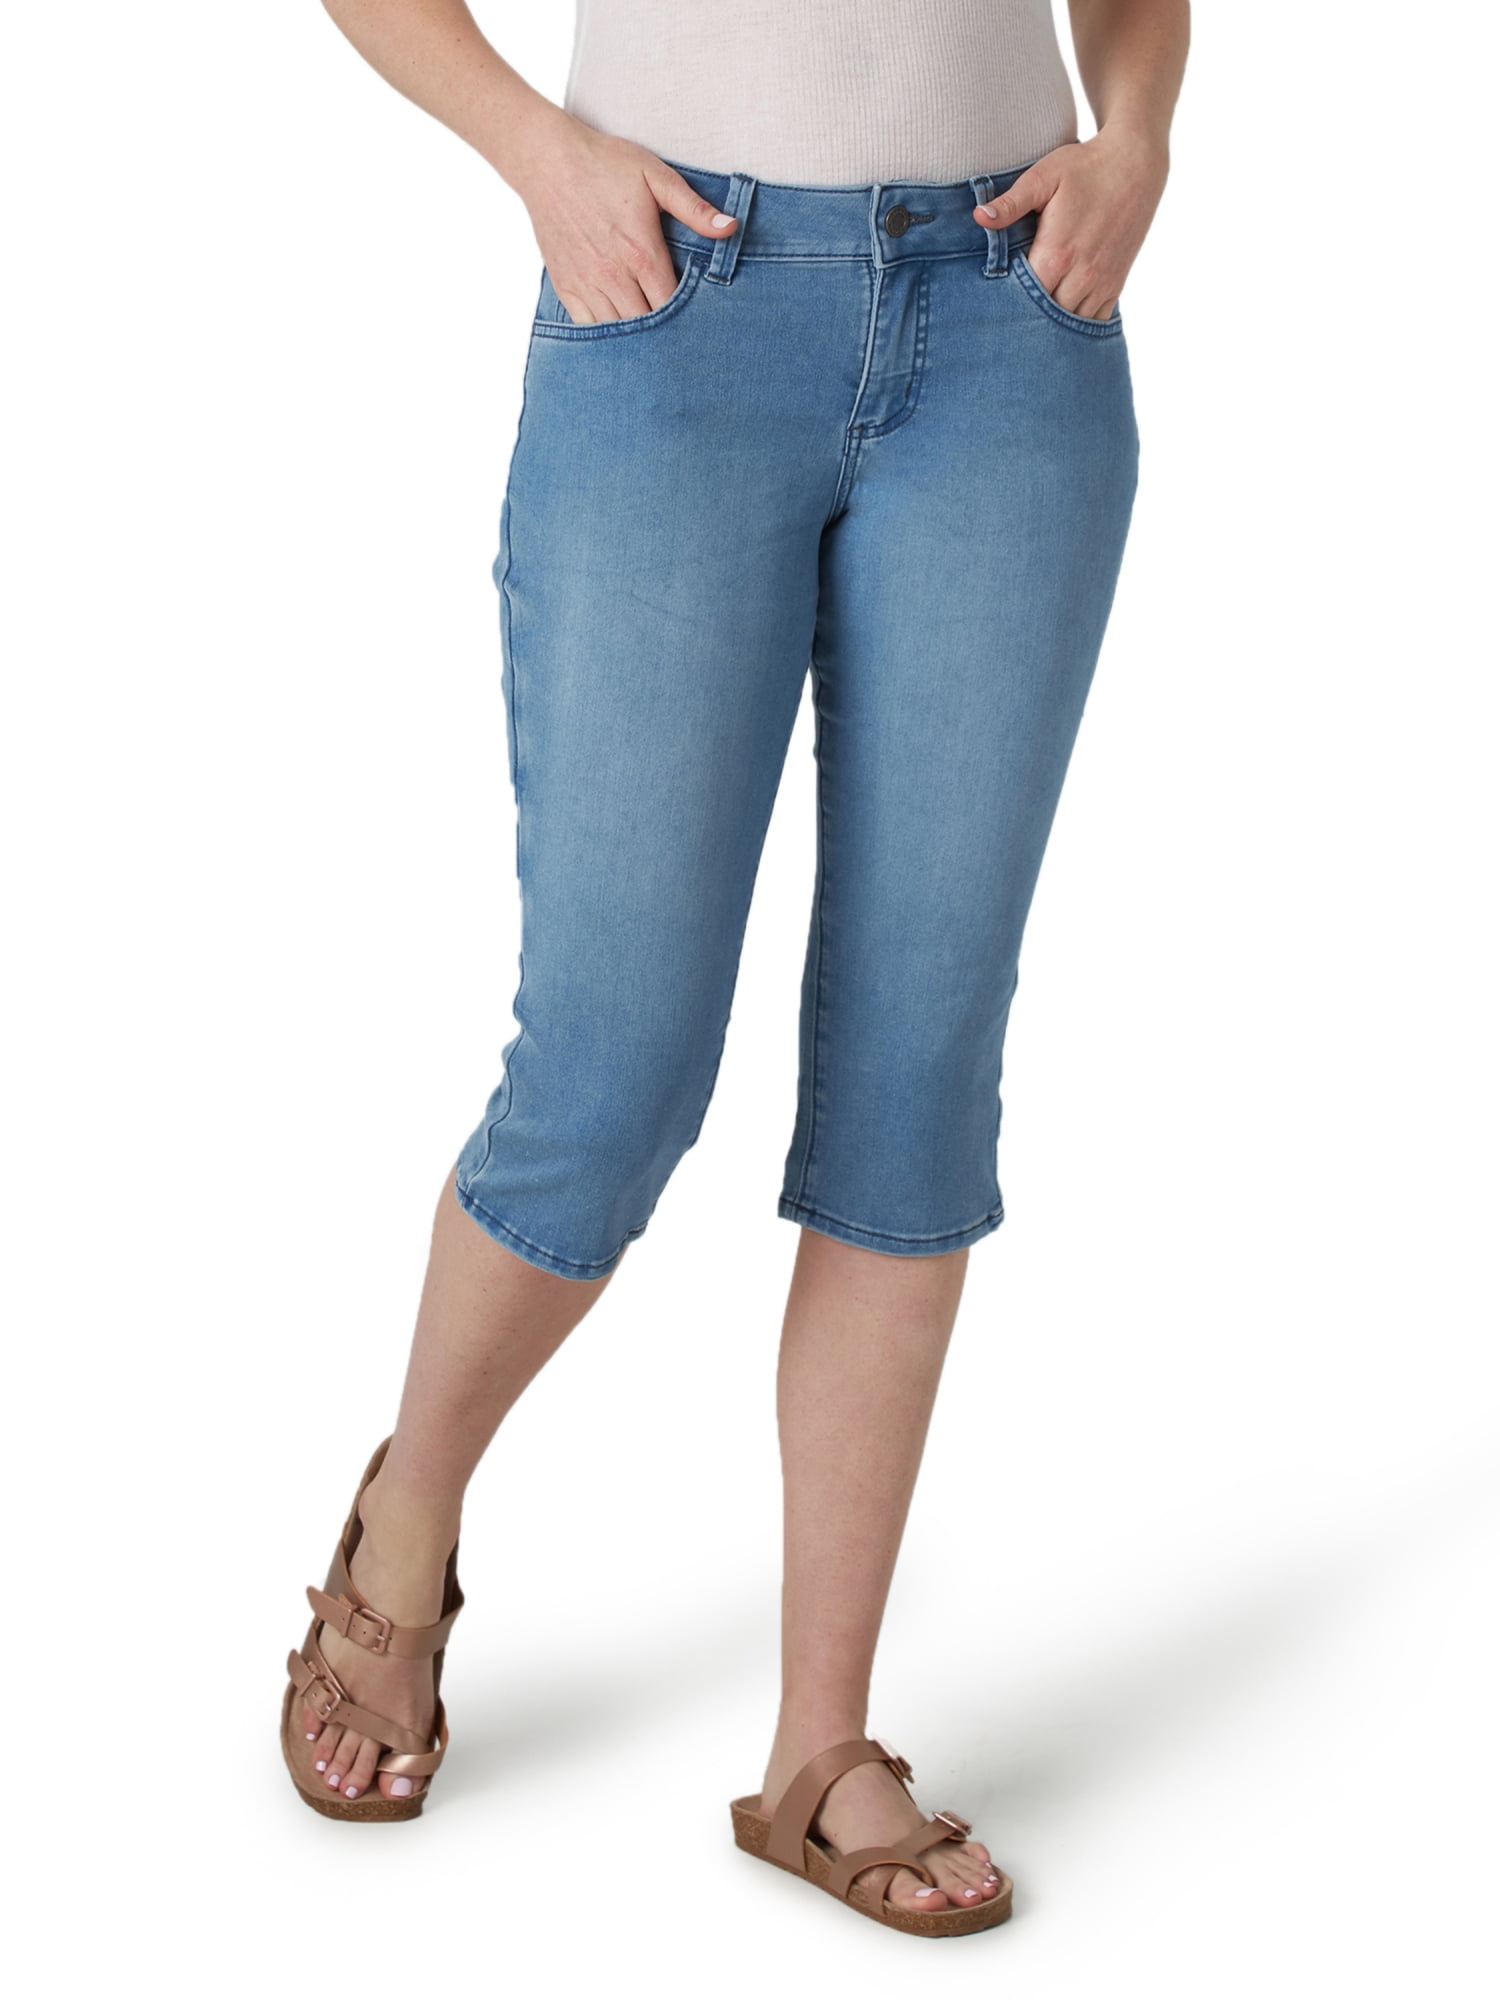 Buy Milestouch Women'S Jean (Iq28_Multicolor_Free Size) at